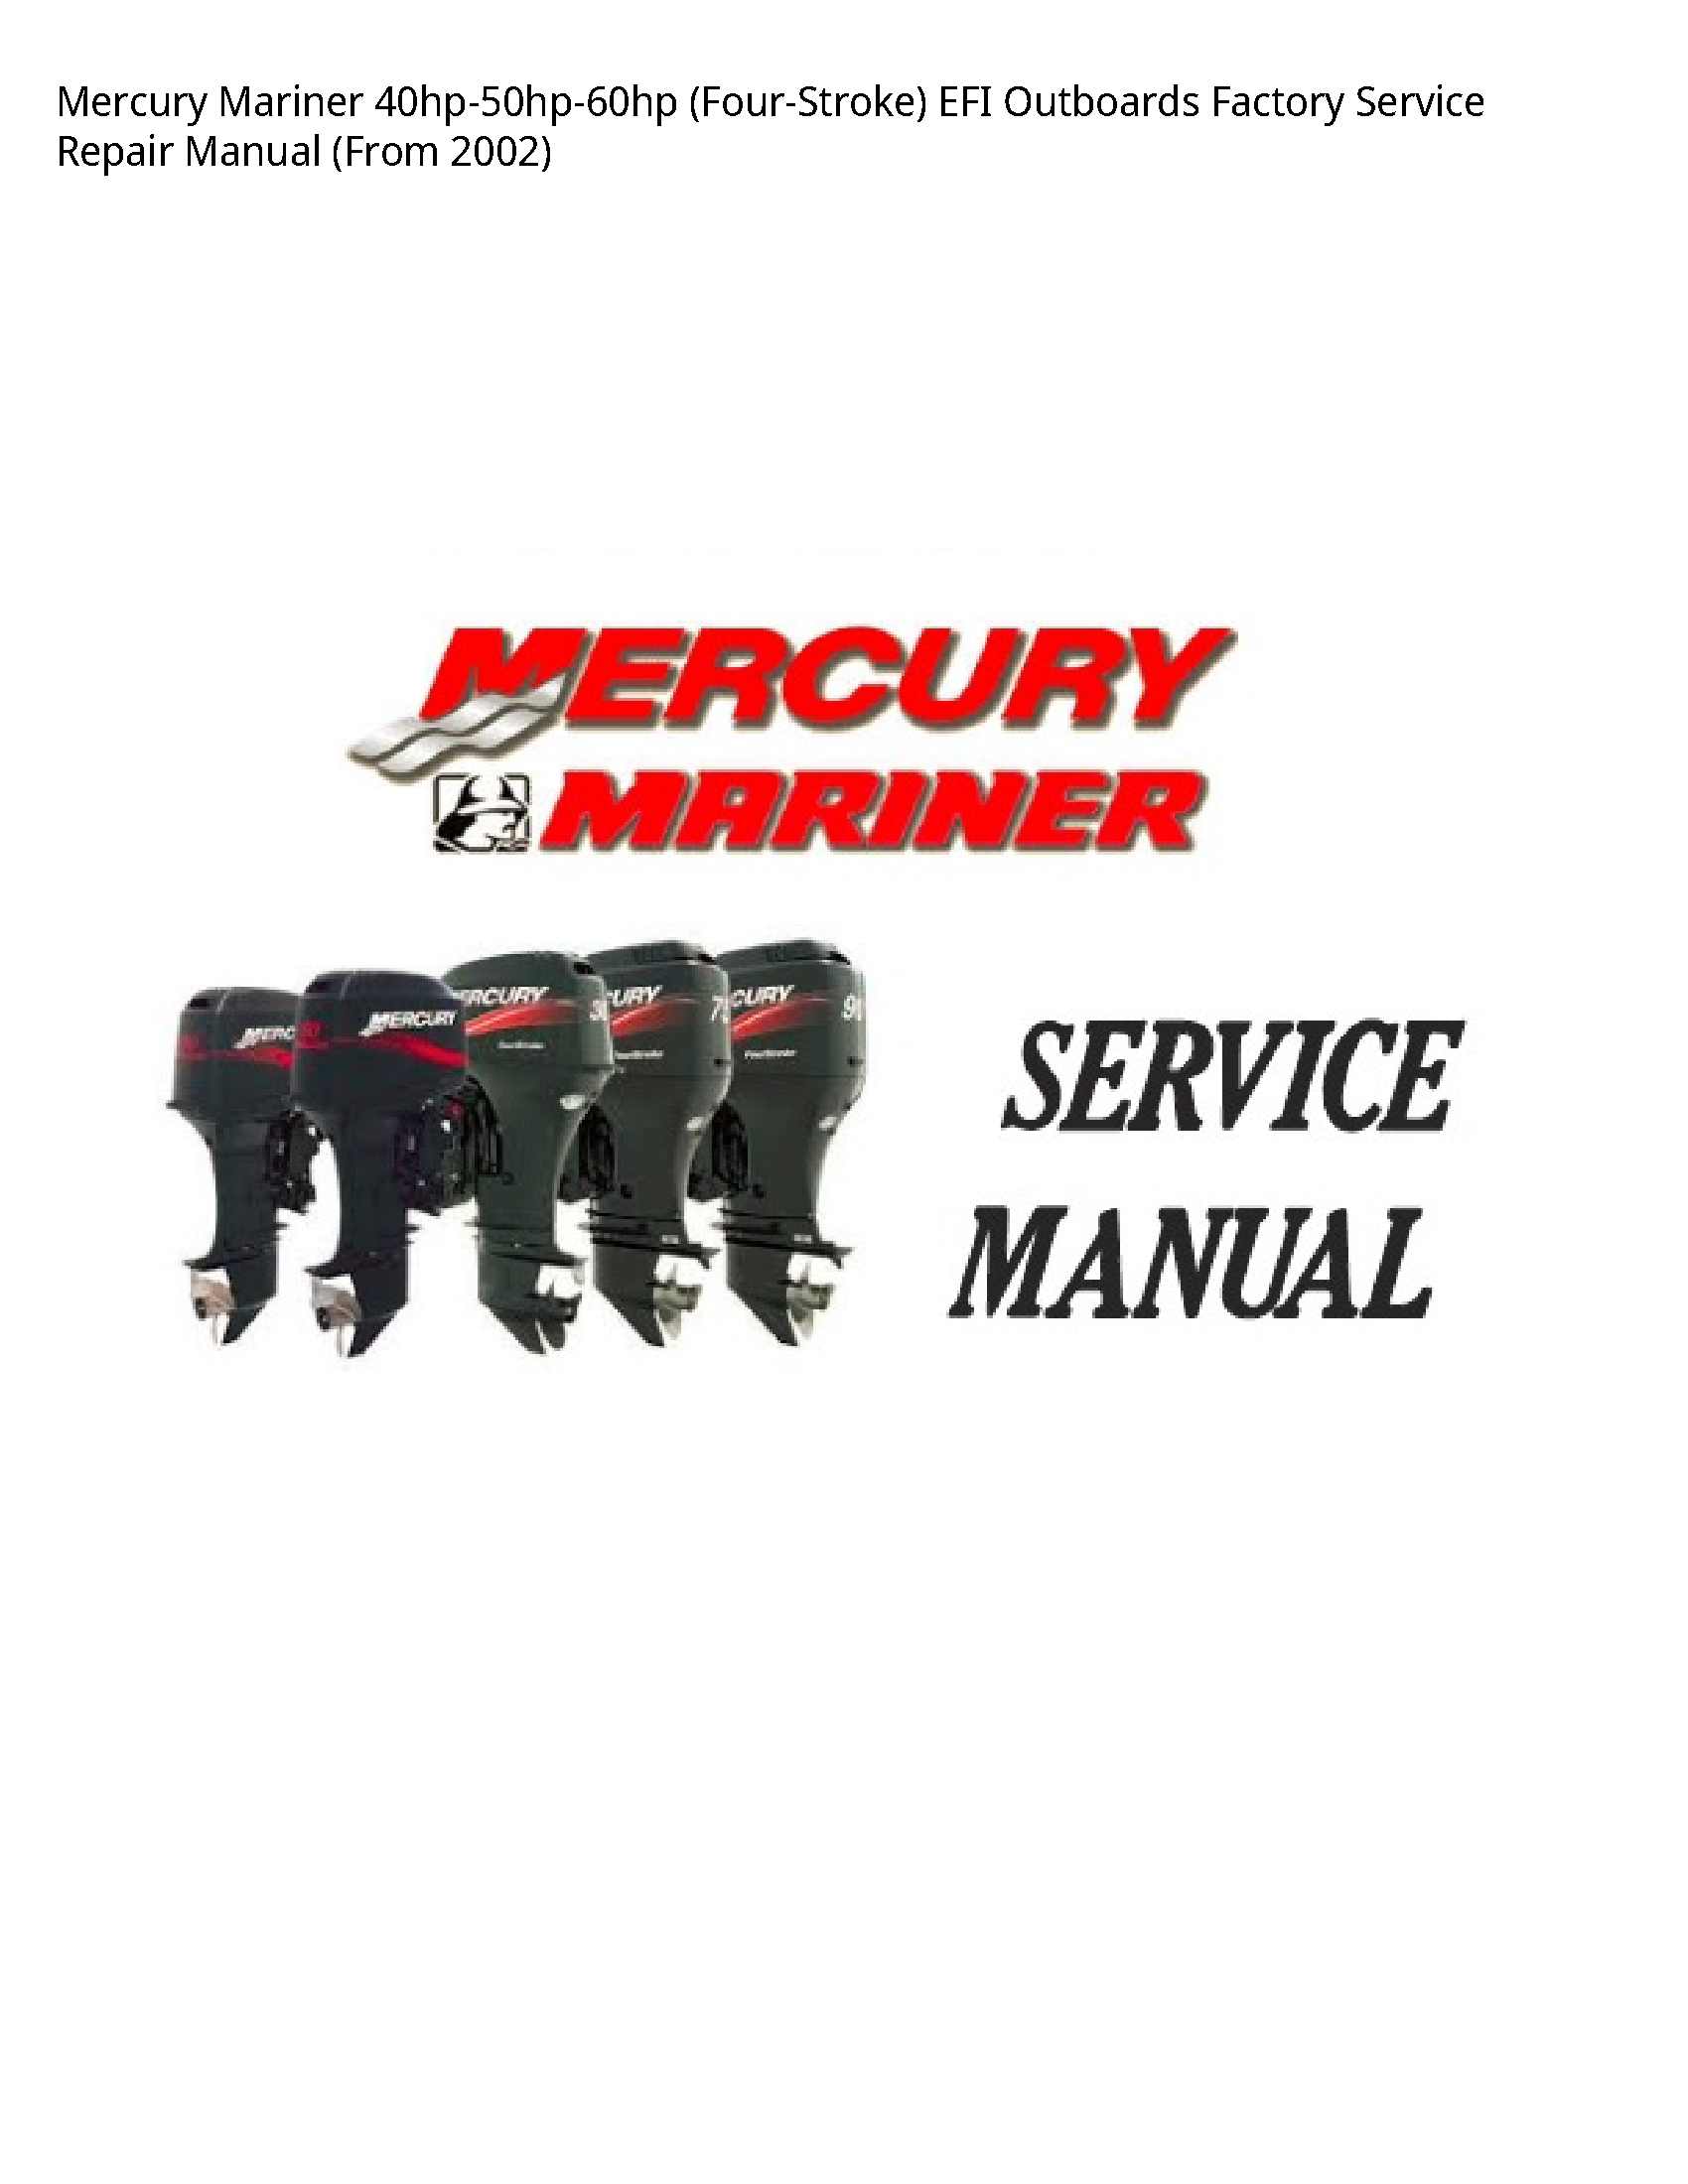 Mercury Mariner 40hp-50hp-60hp (Four-Stroke) EFI Outboards Factory manual